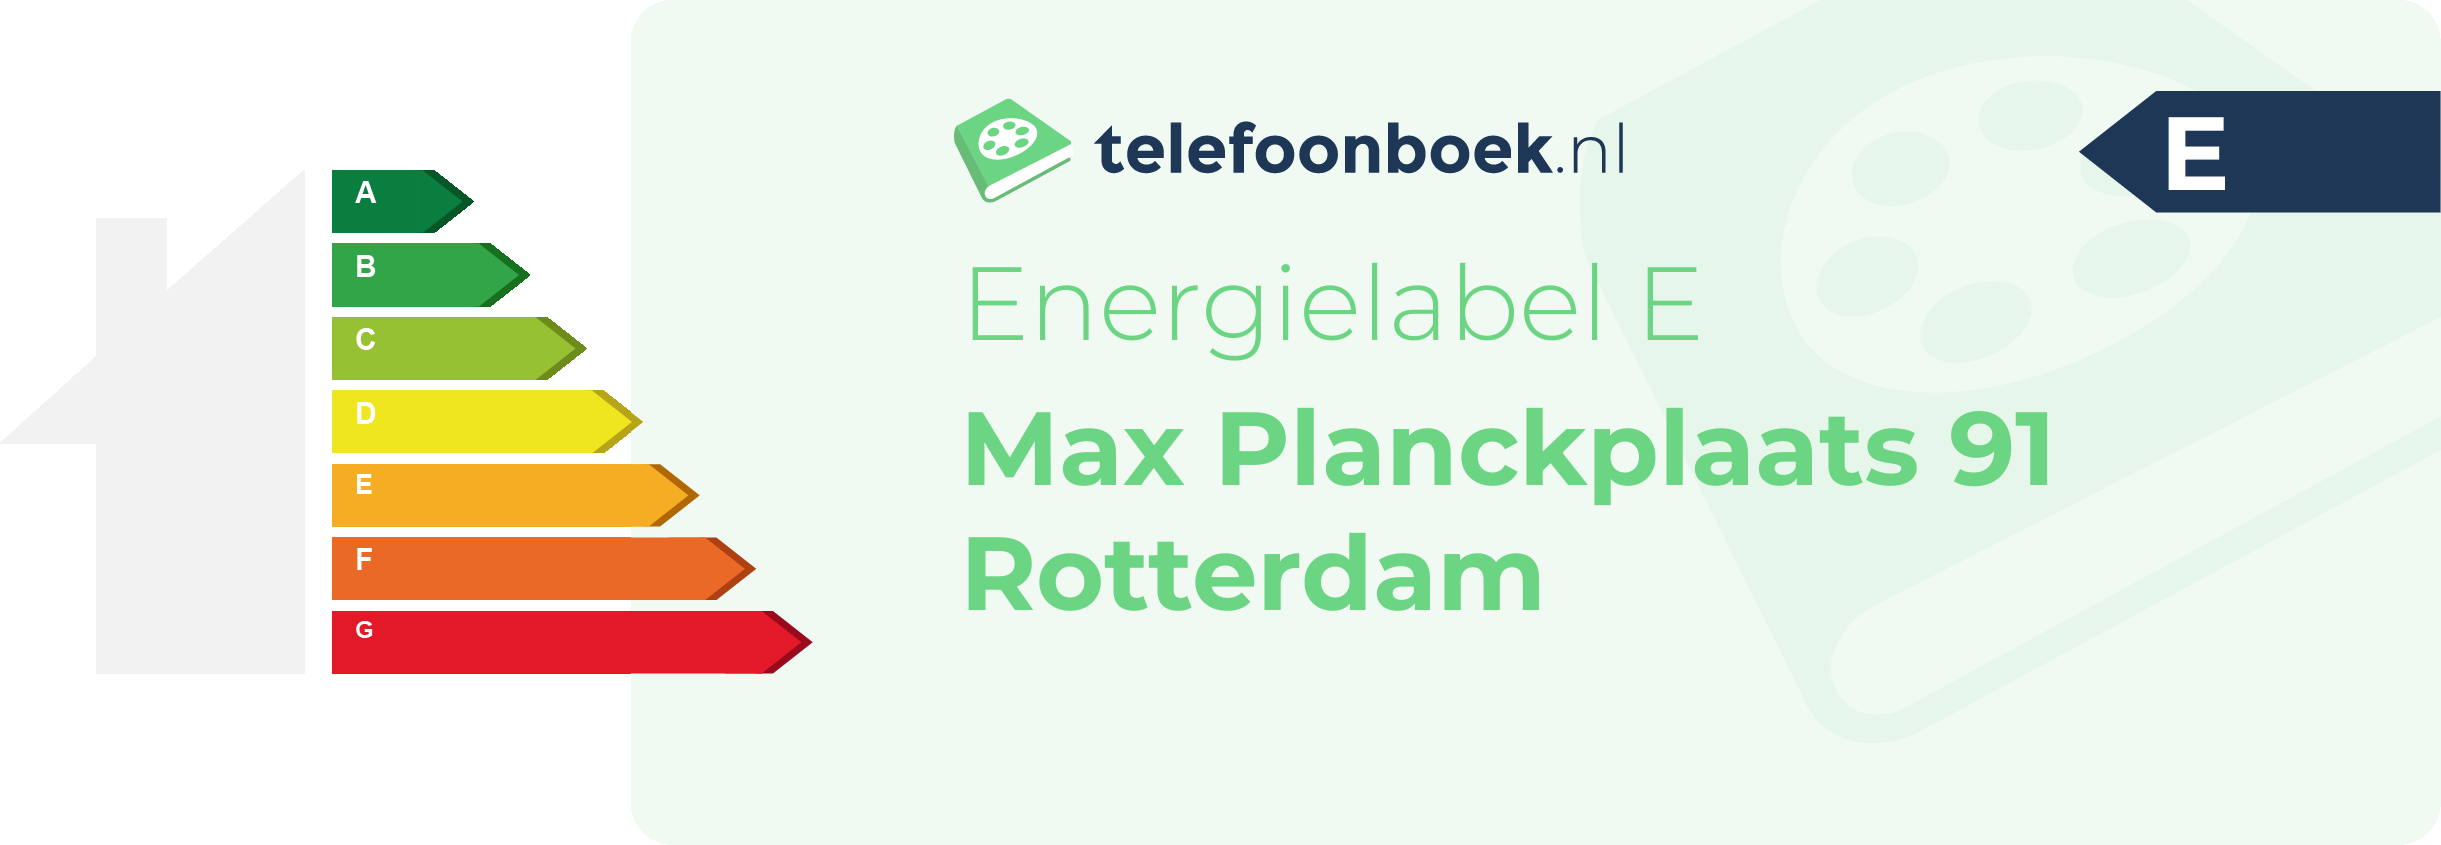 Energielabel Max Planckplaats 91 Rotterdam